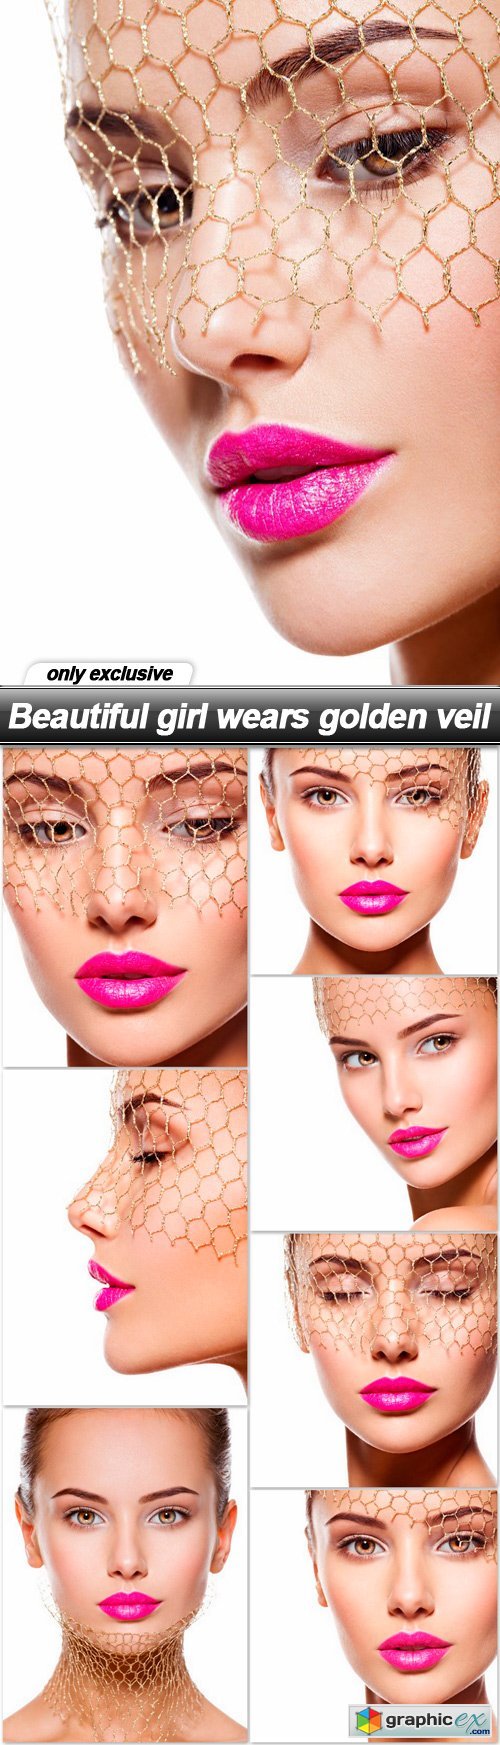 Beautiful girl wears golden veil - 8 UHQ JPEG